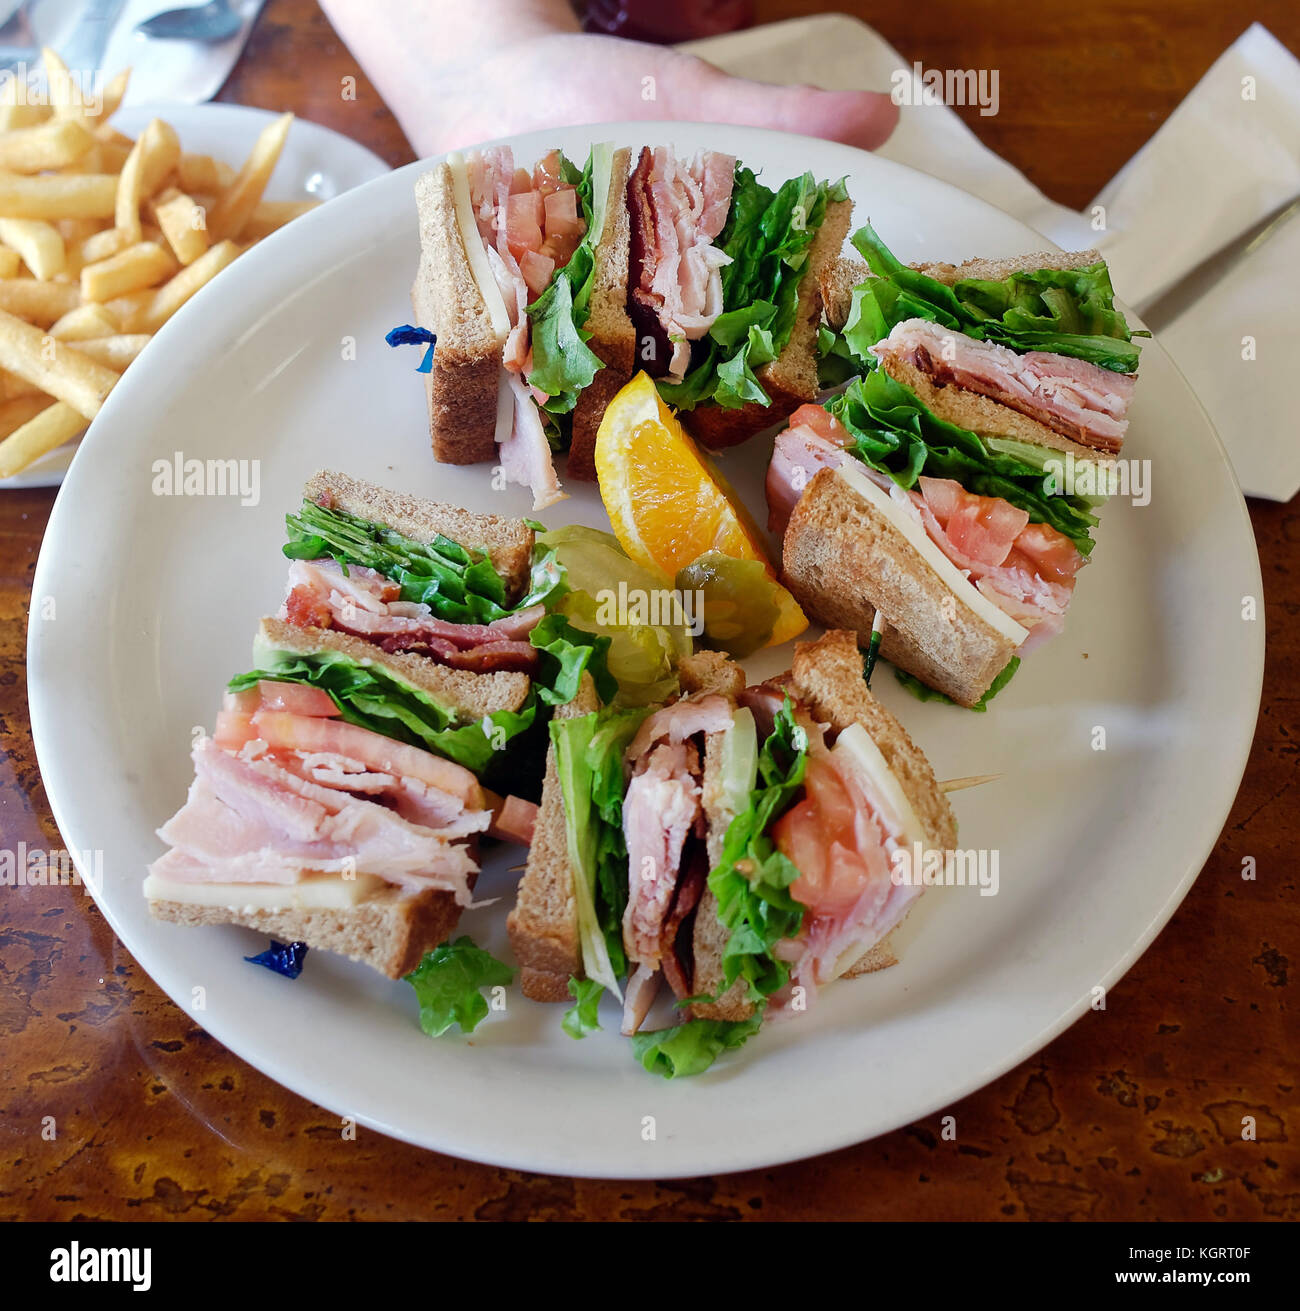 Hand presenting basic triangle cut club sandwich on white plate. Stock Photo